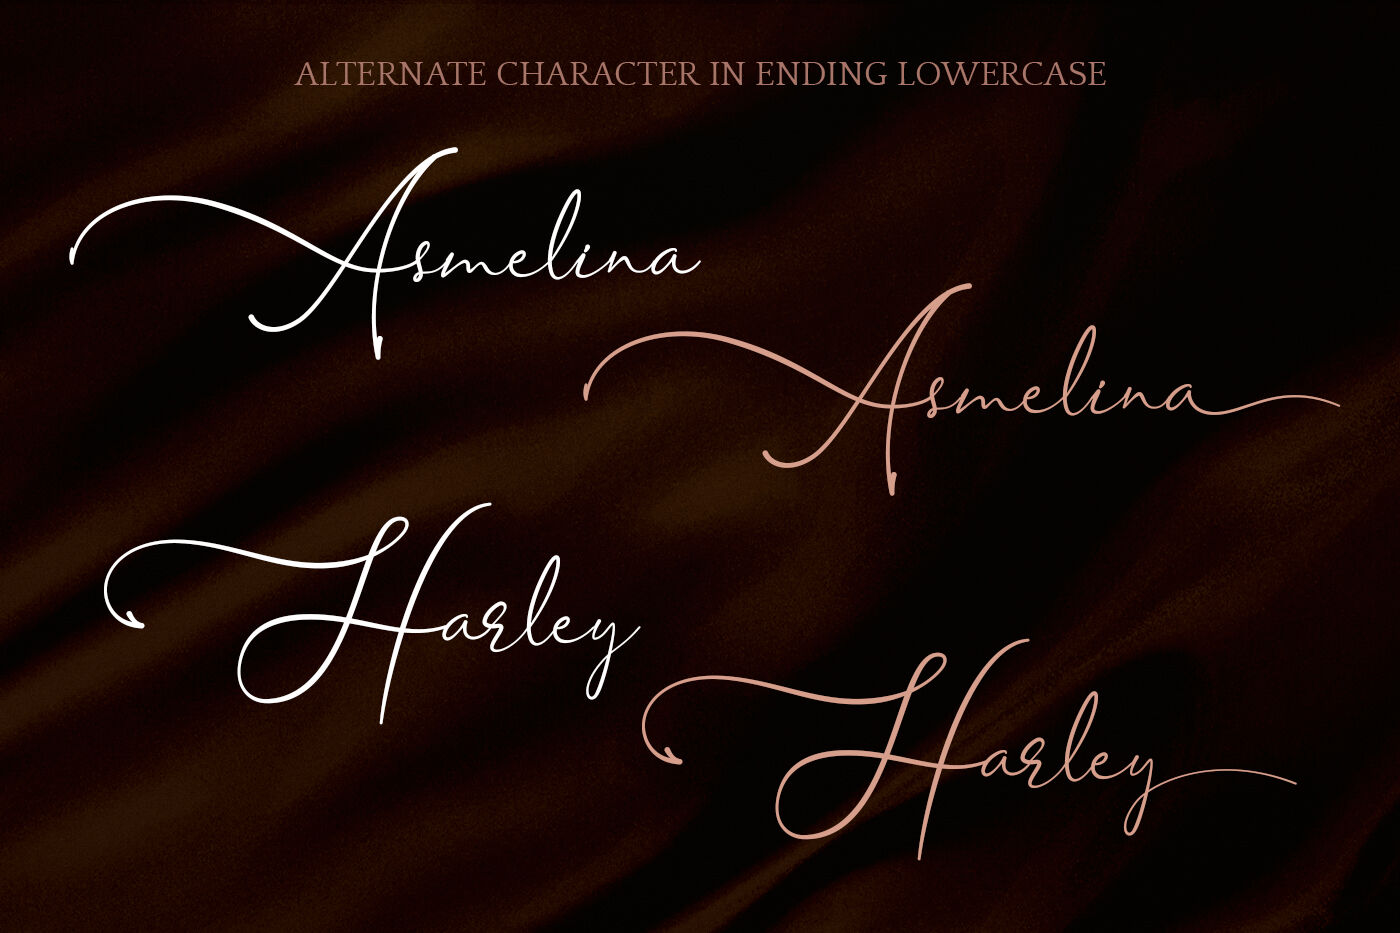 Asmelina Harley Script By Kotak Kuning Studio Thehungryjpeg Com